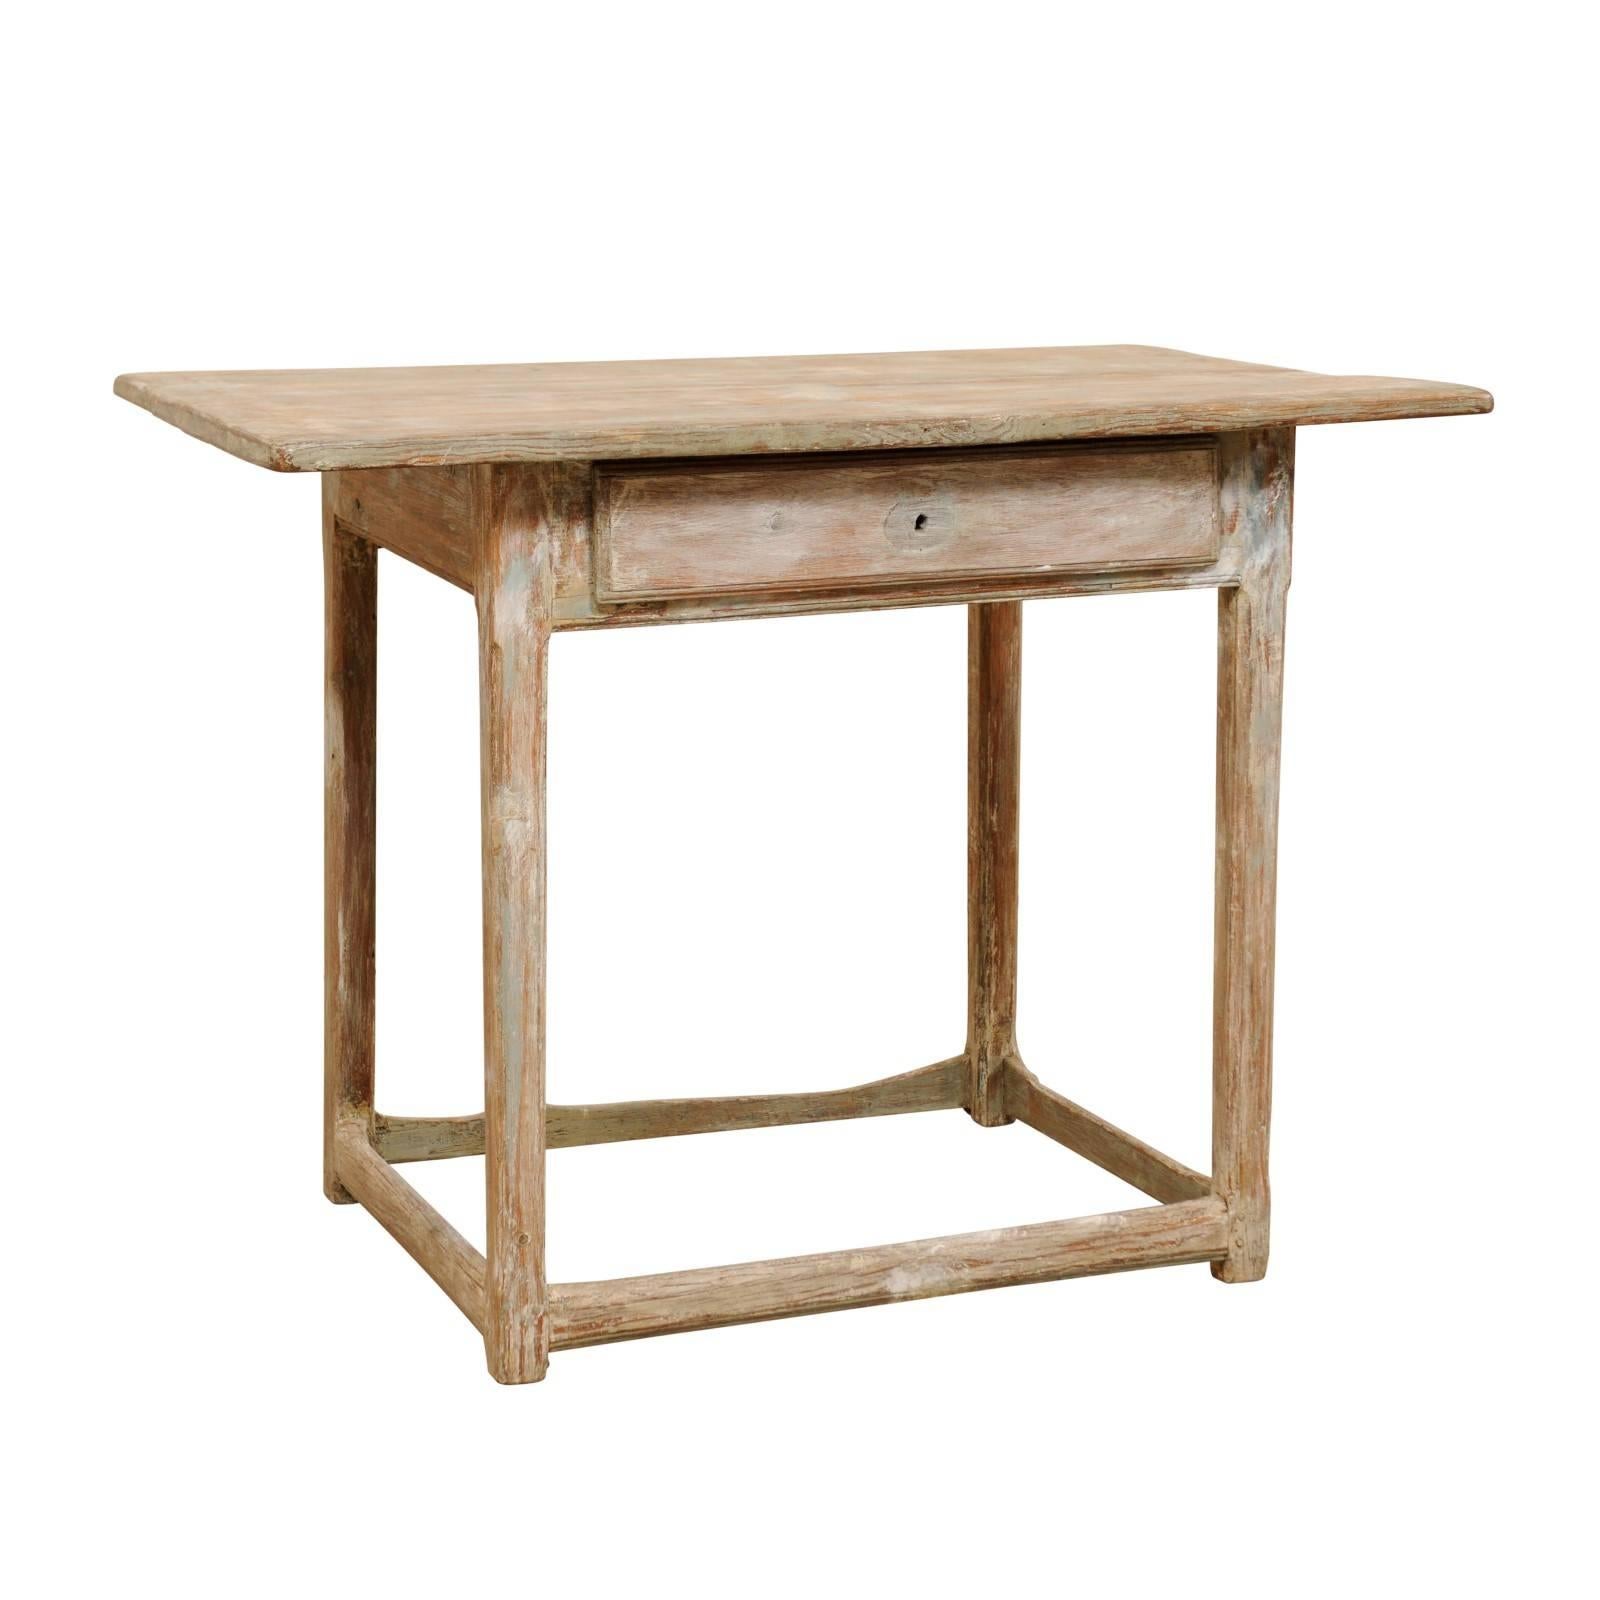 Period Gustavian Swedish 19th Century Pale Fir Wood Side Table